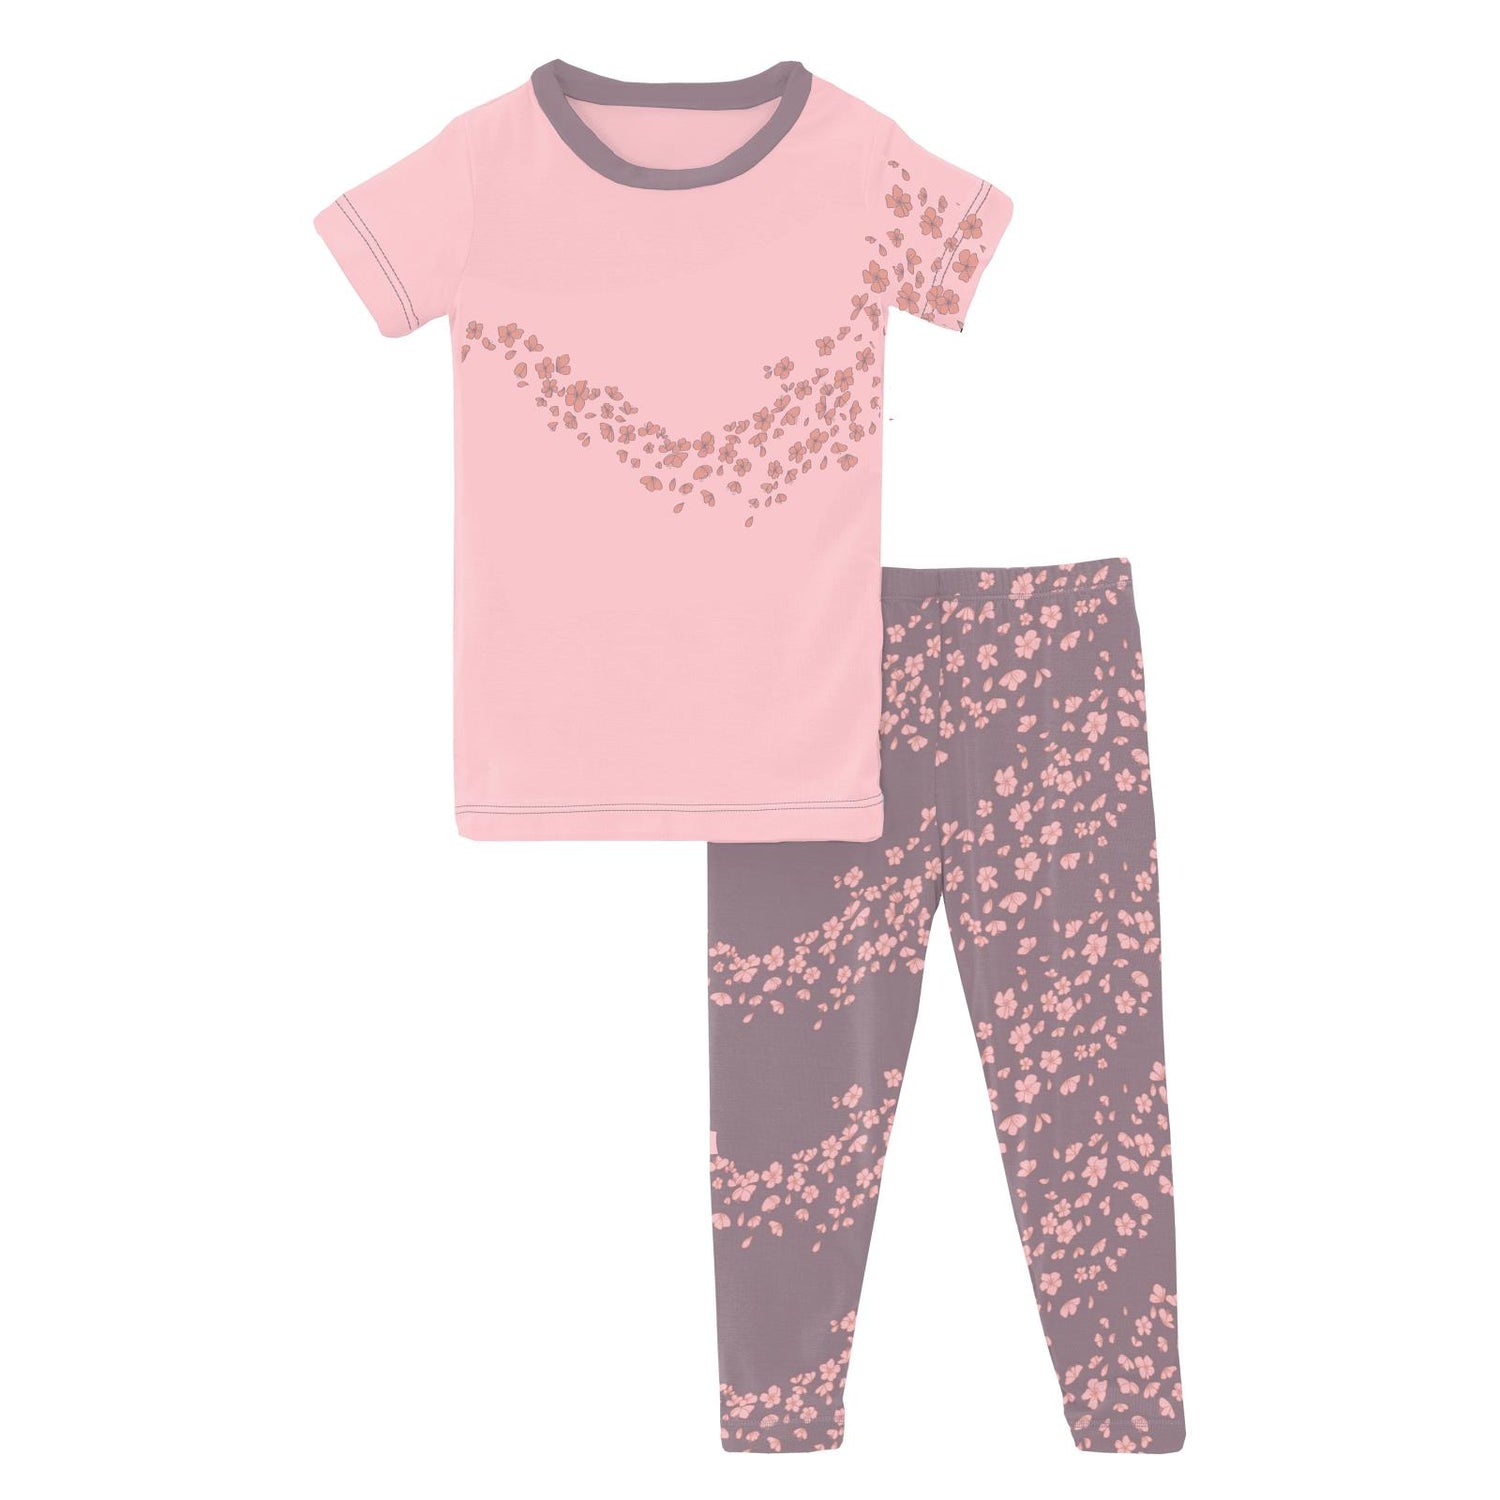 Short Sleeve Graphic Tee Pajama Set in Elderberry Sakura Wind